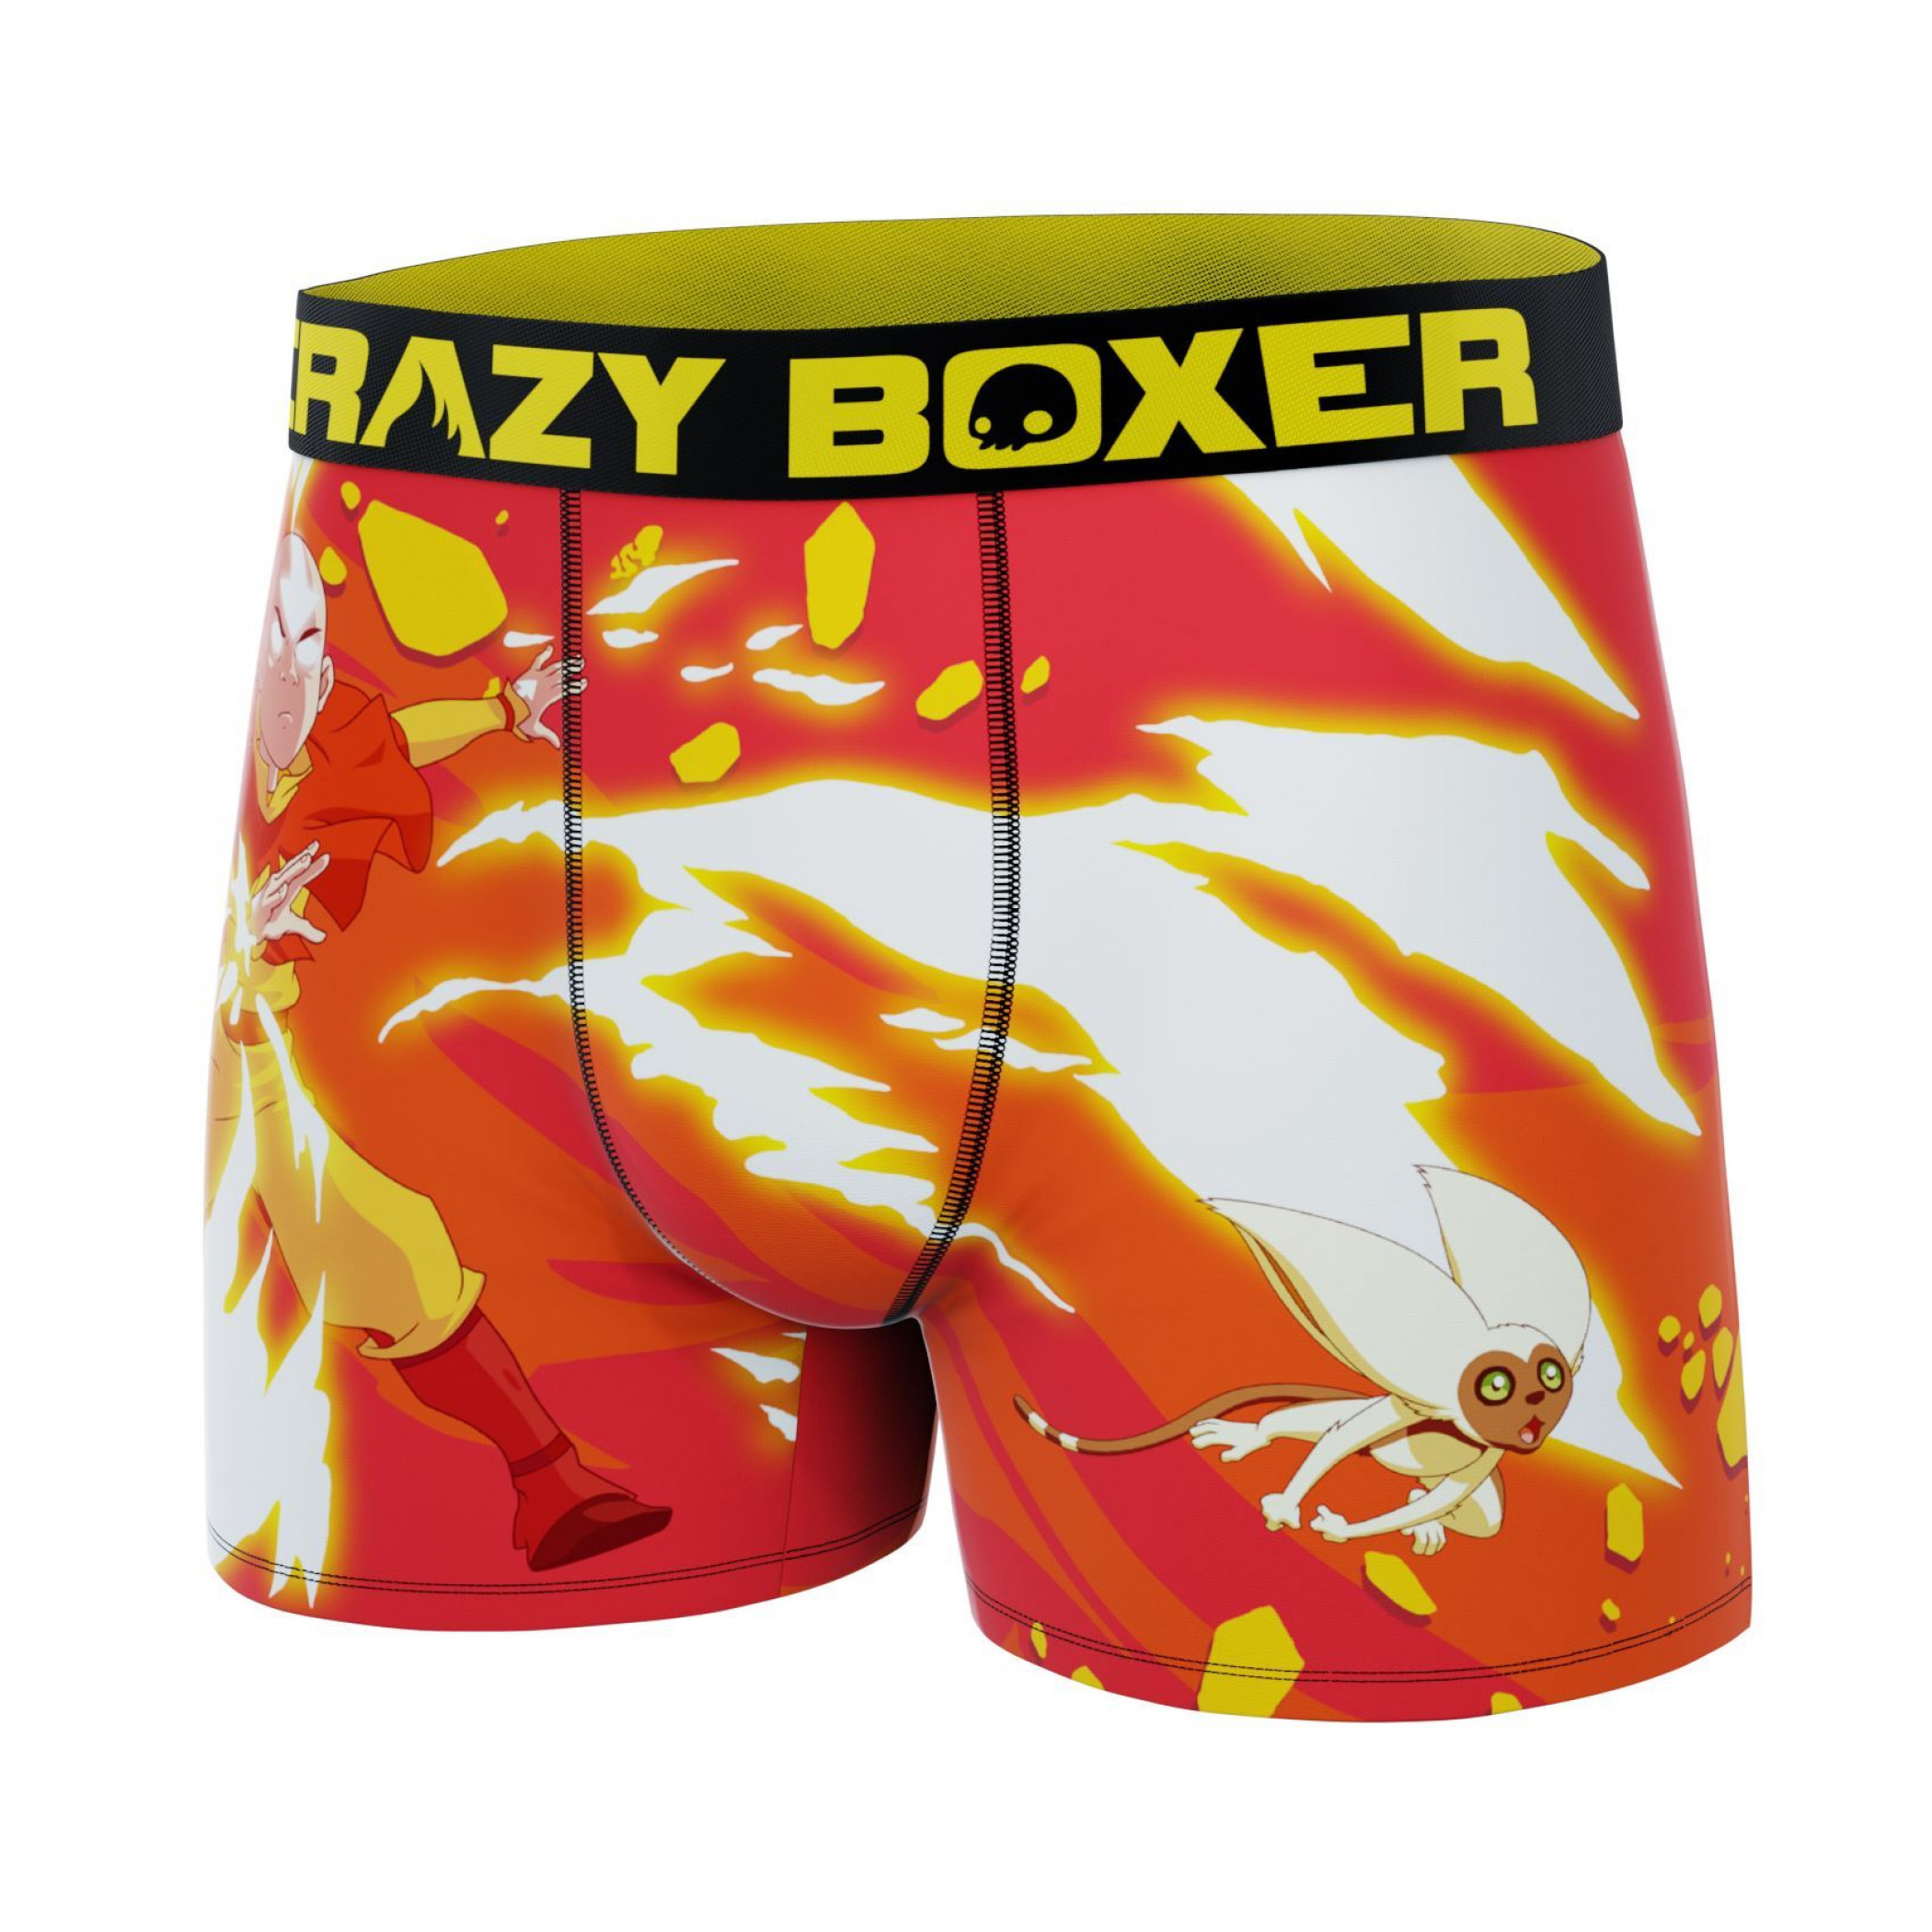 Men's Santa Hat & Boxers Shorts Gift Set Large 36-38 NWT $32 